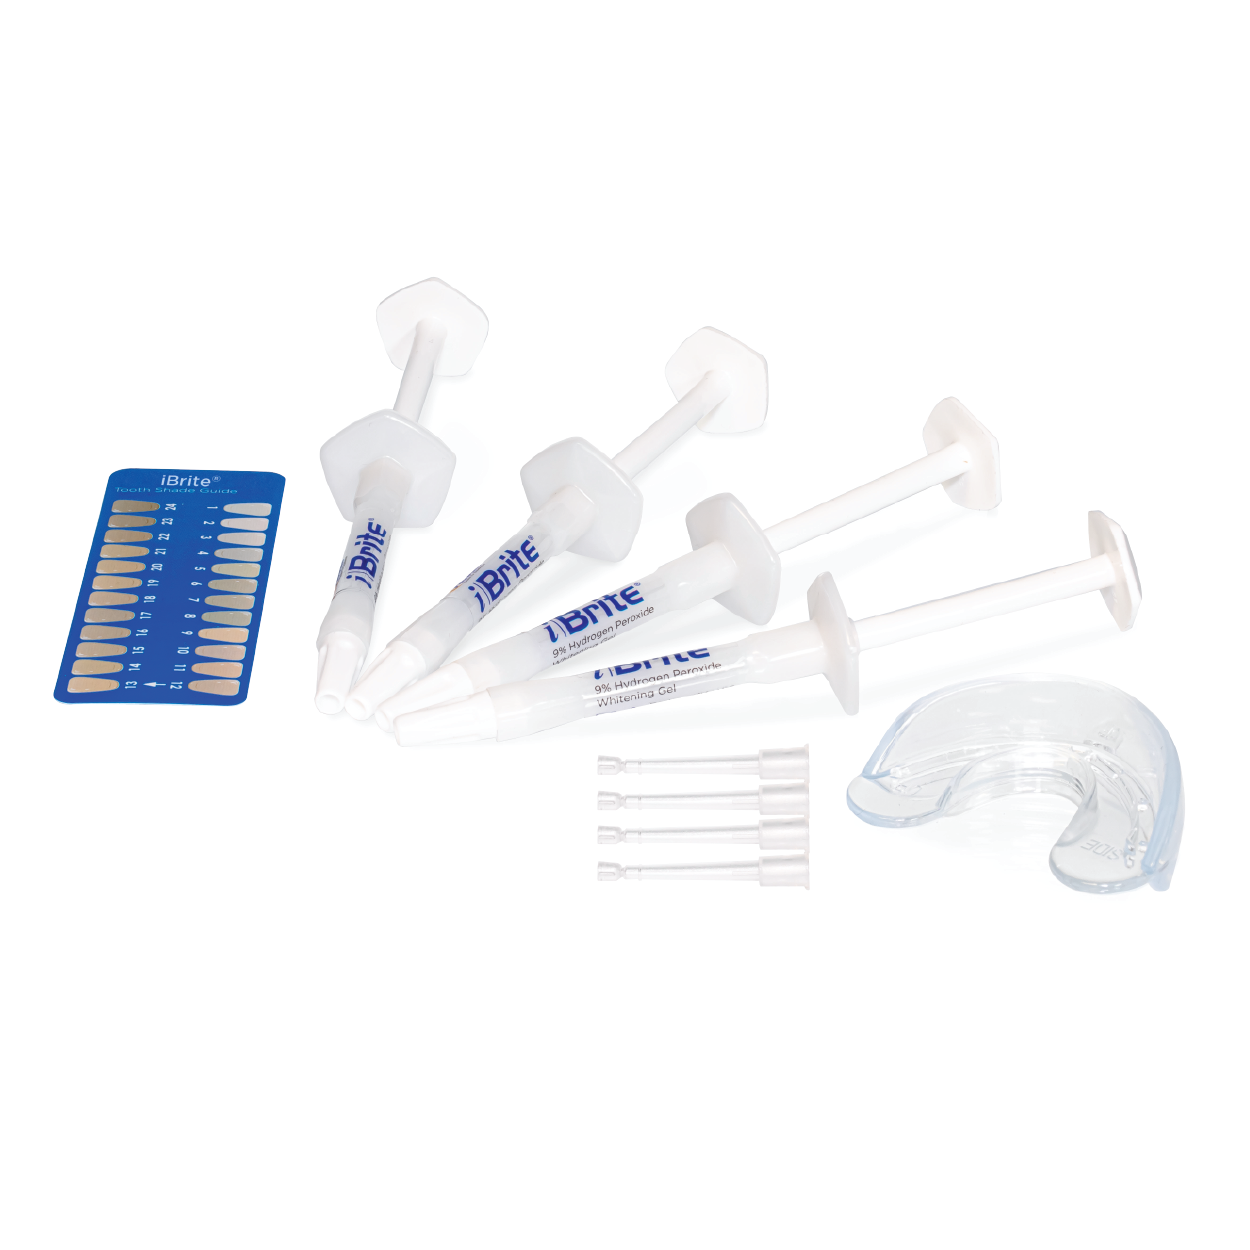 iBrite® Premium Teeth Whitening Kit